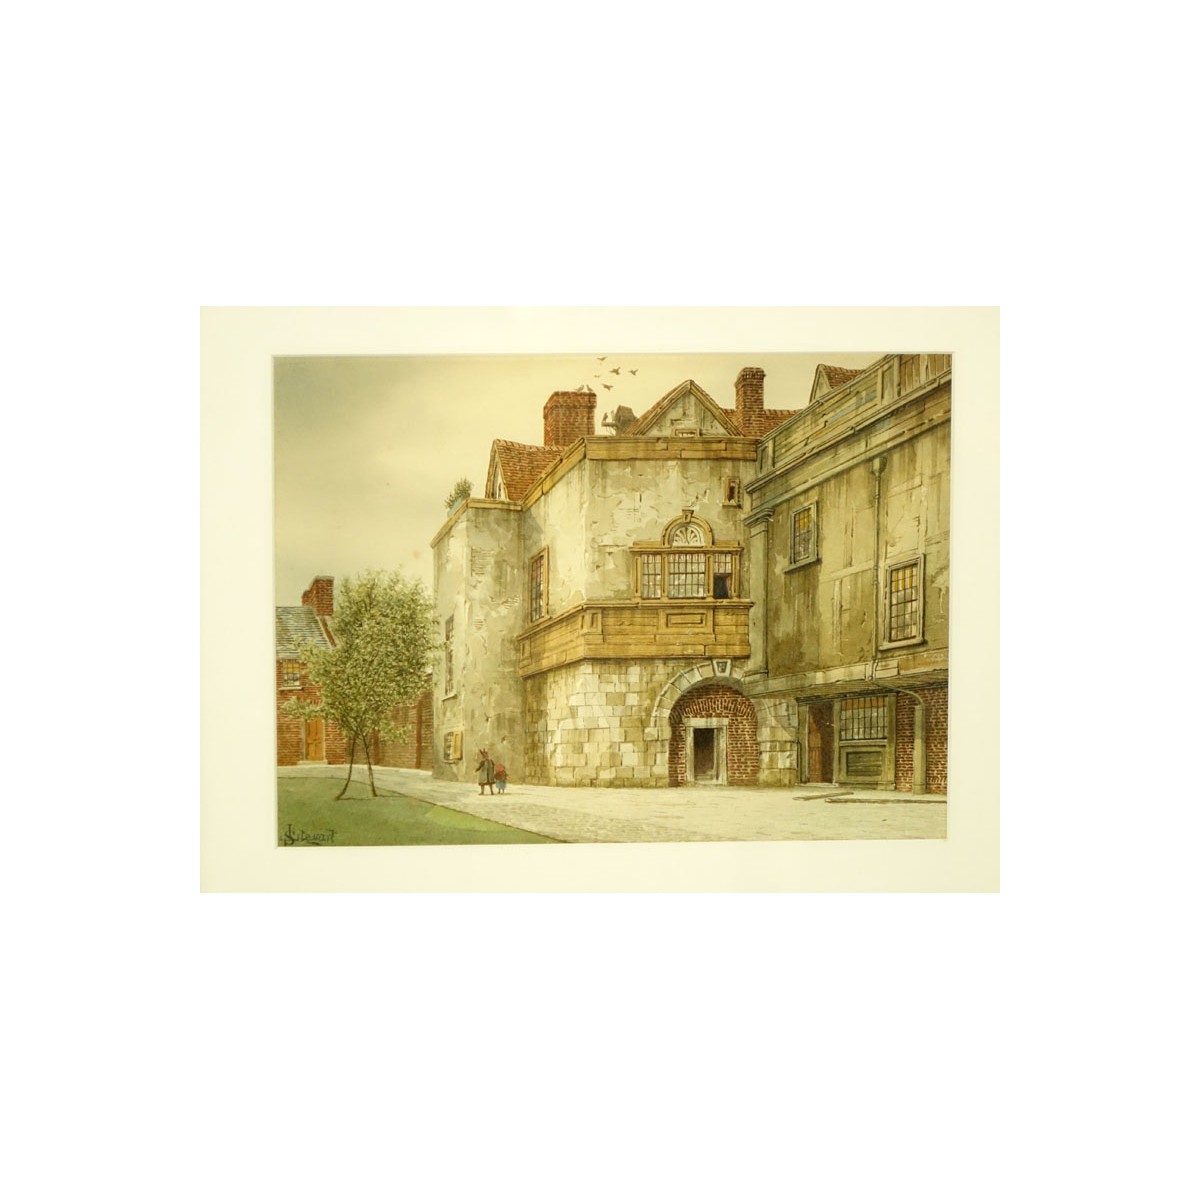 Two(2) James Lawson Stewart (1841-1929) Watercolor